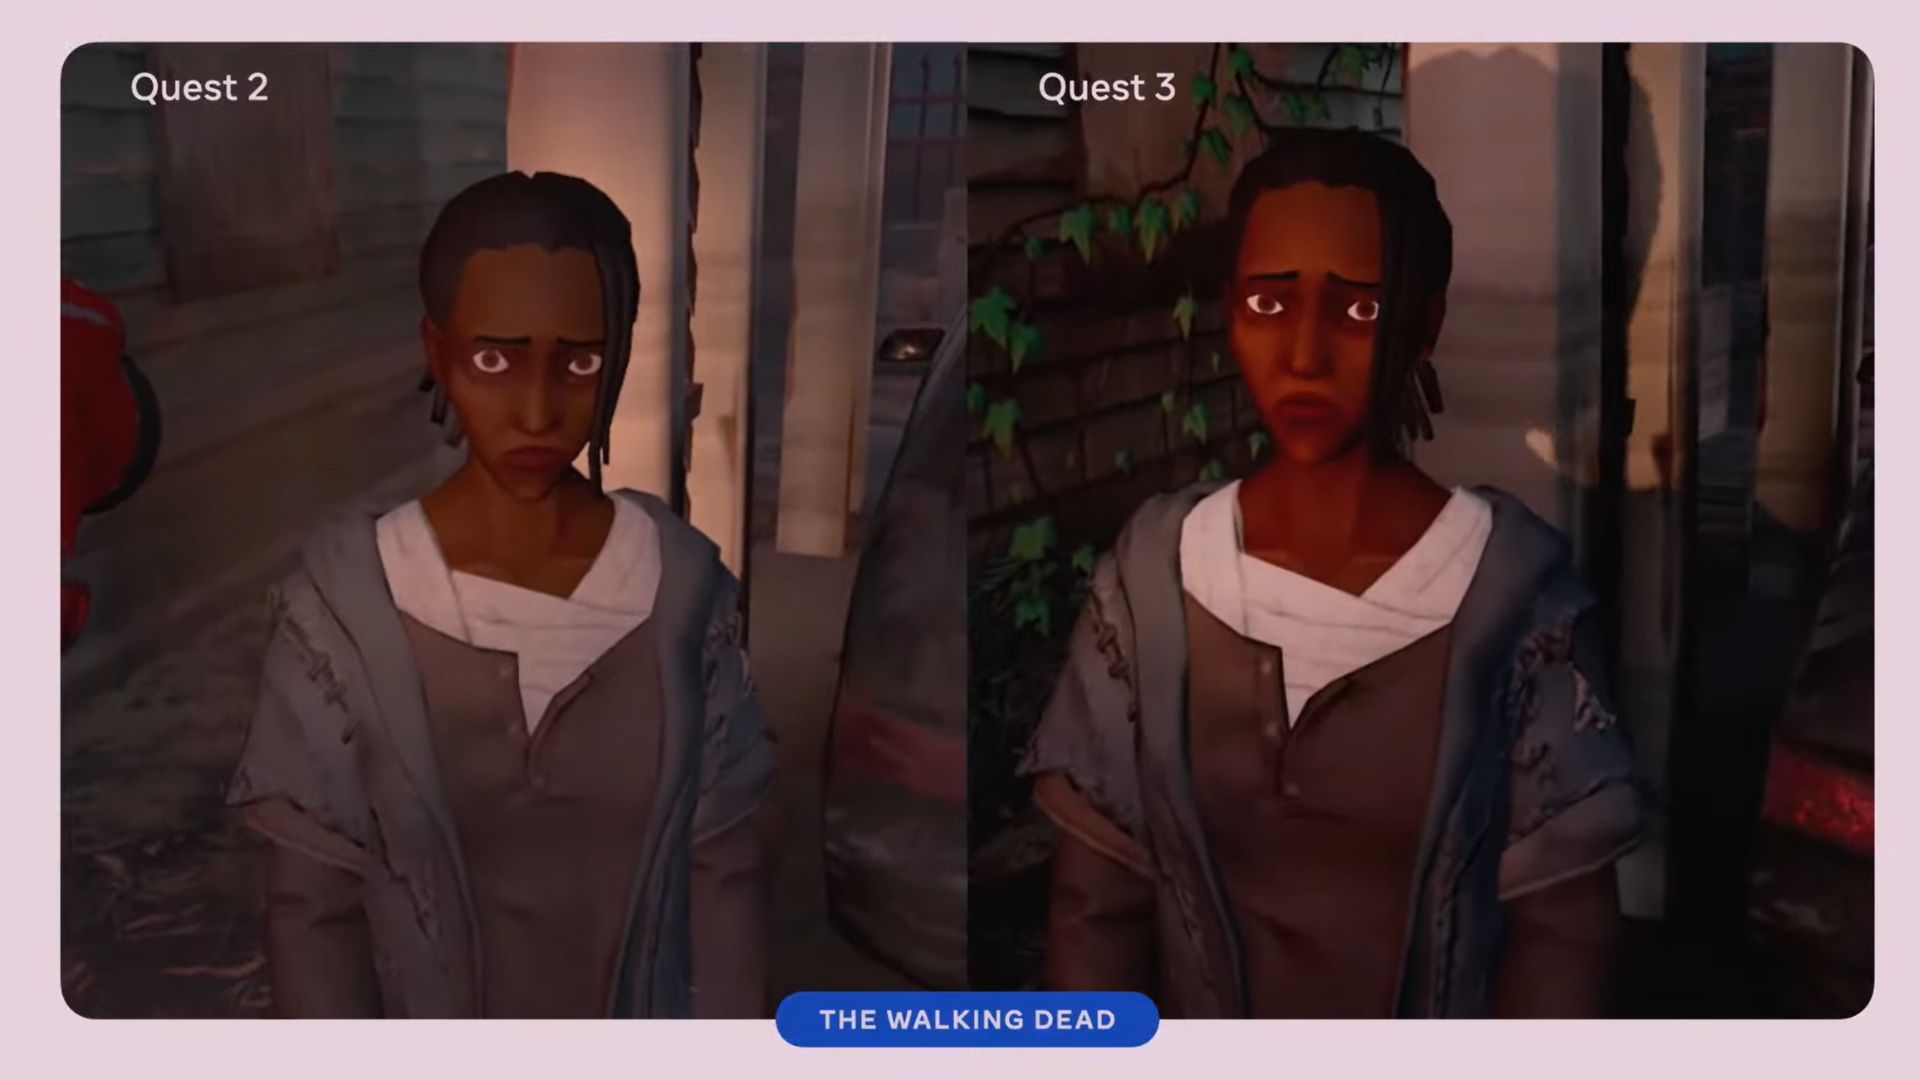 Meta Quest 3 Grafikvergleich mit dem Walking Dead VR